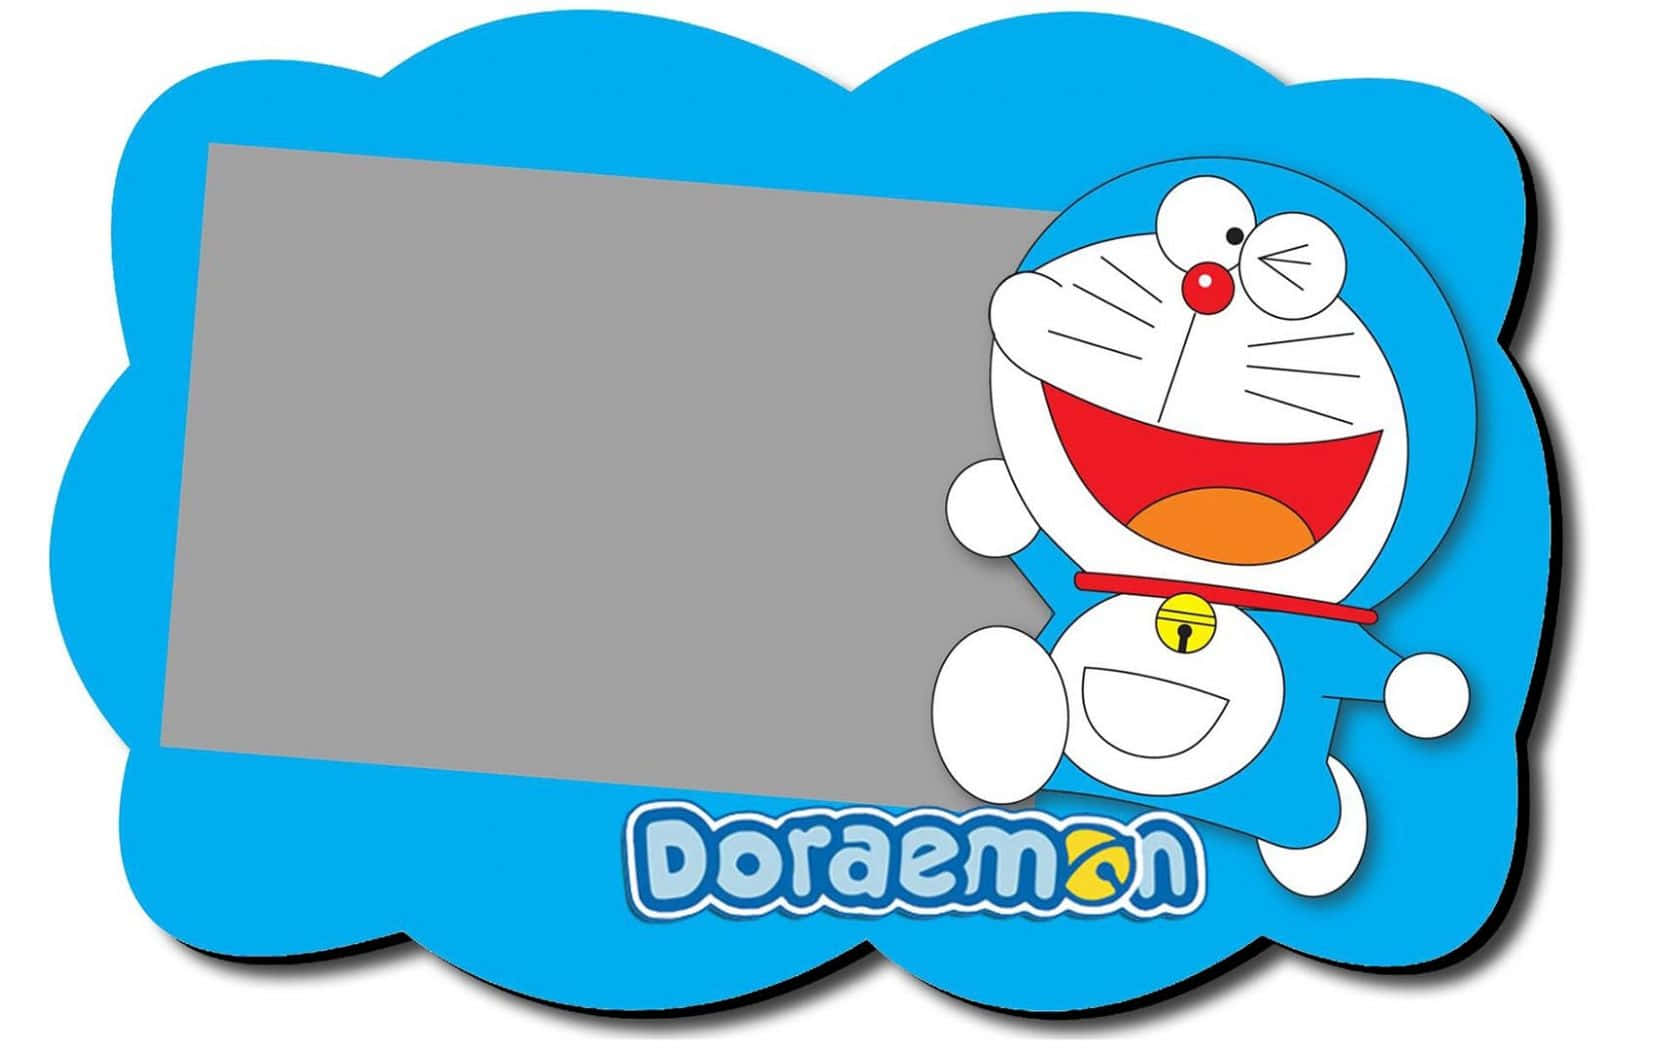 The beloved Japanese robotic cat, Doraemon